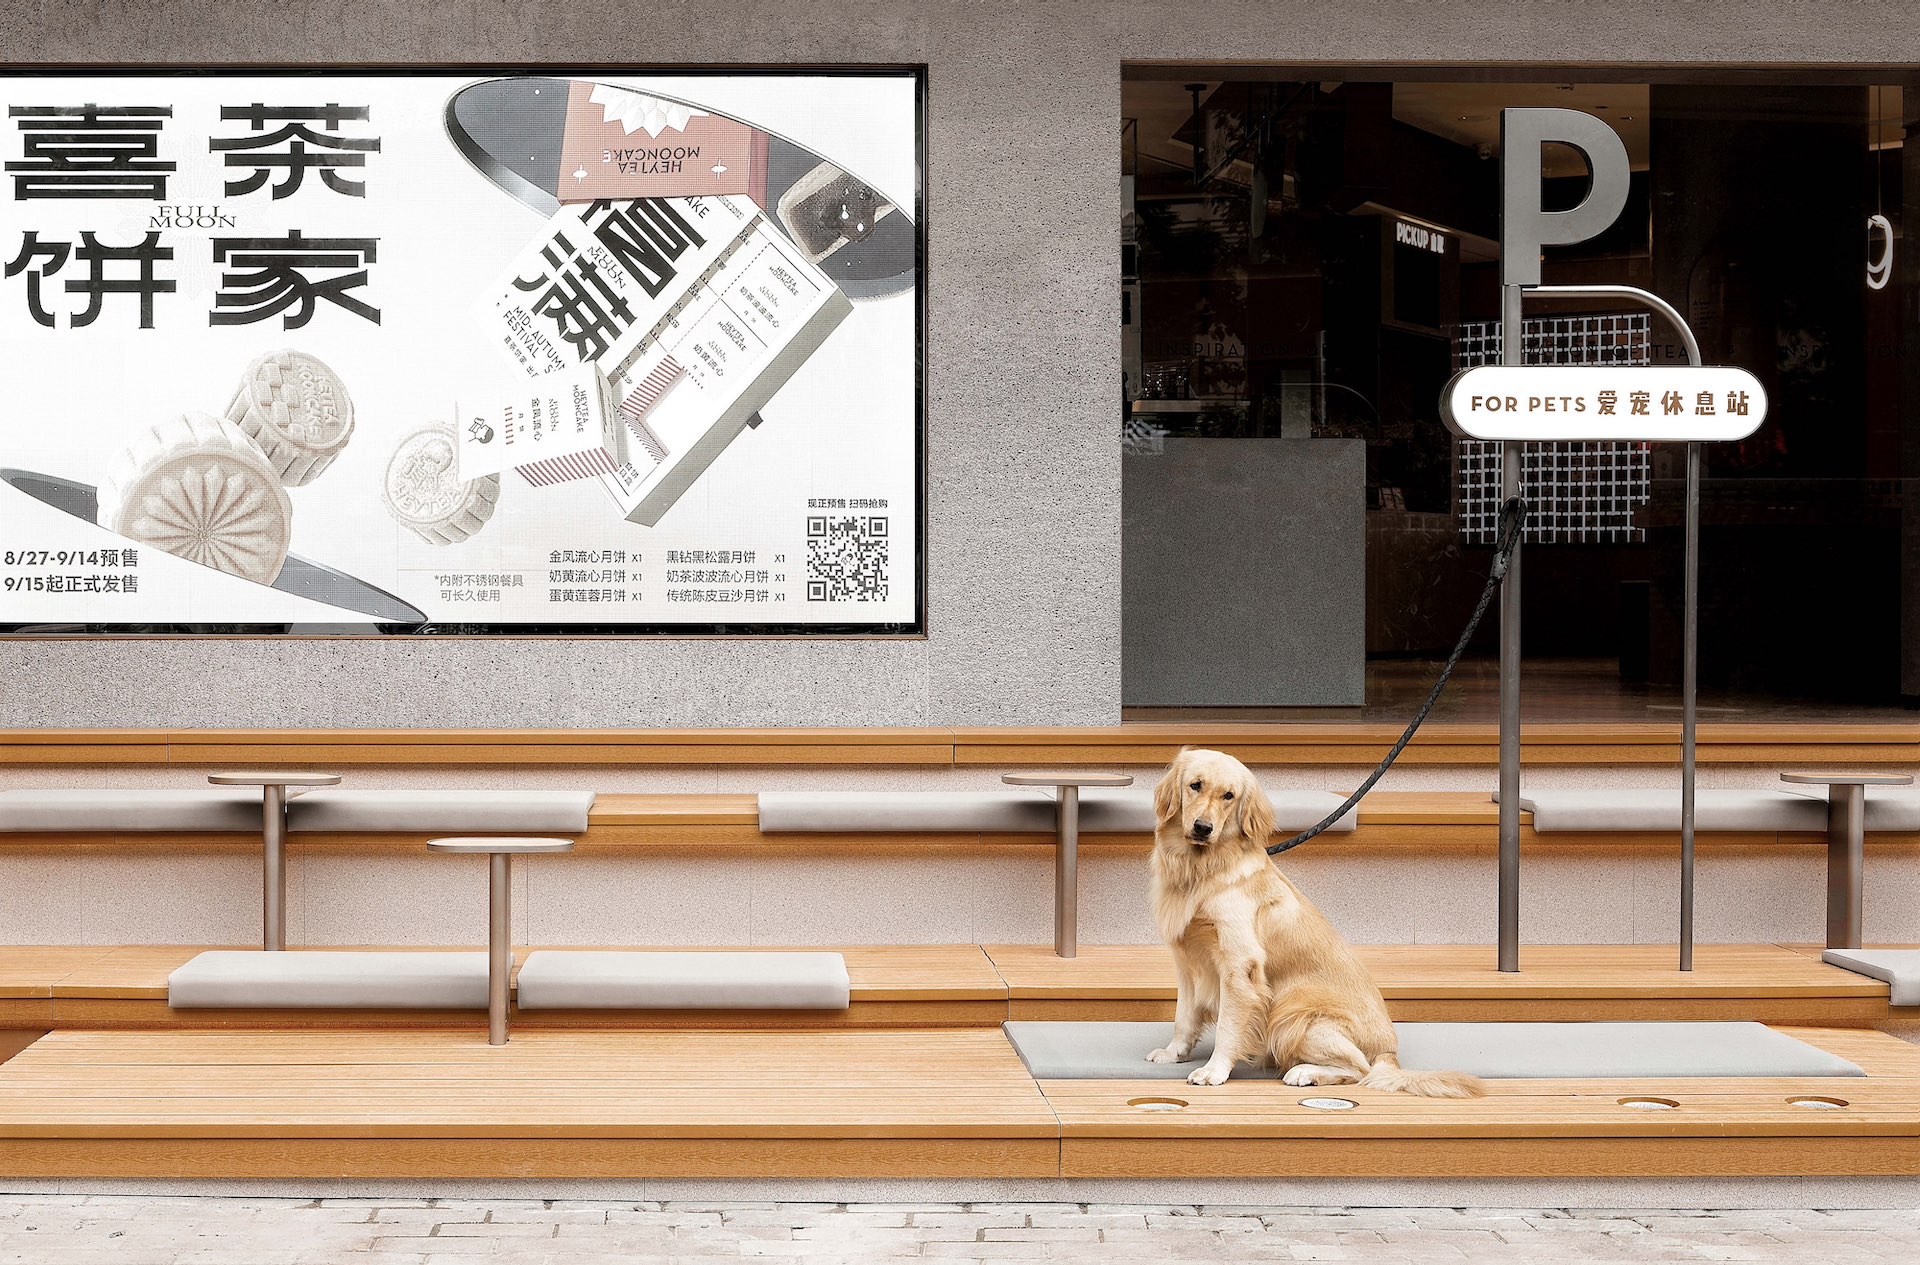 MUSE Design Winners - Companion•HEYTEA Pet Friendly Theme Store